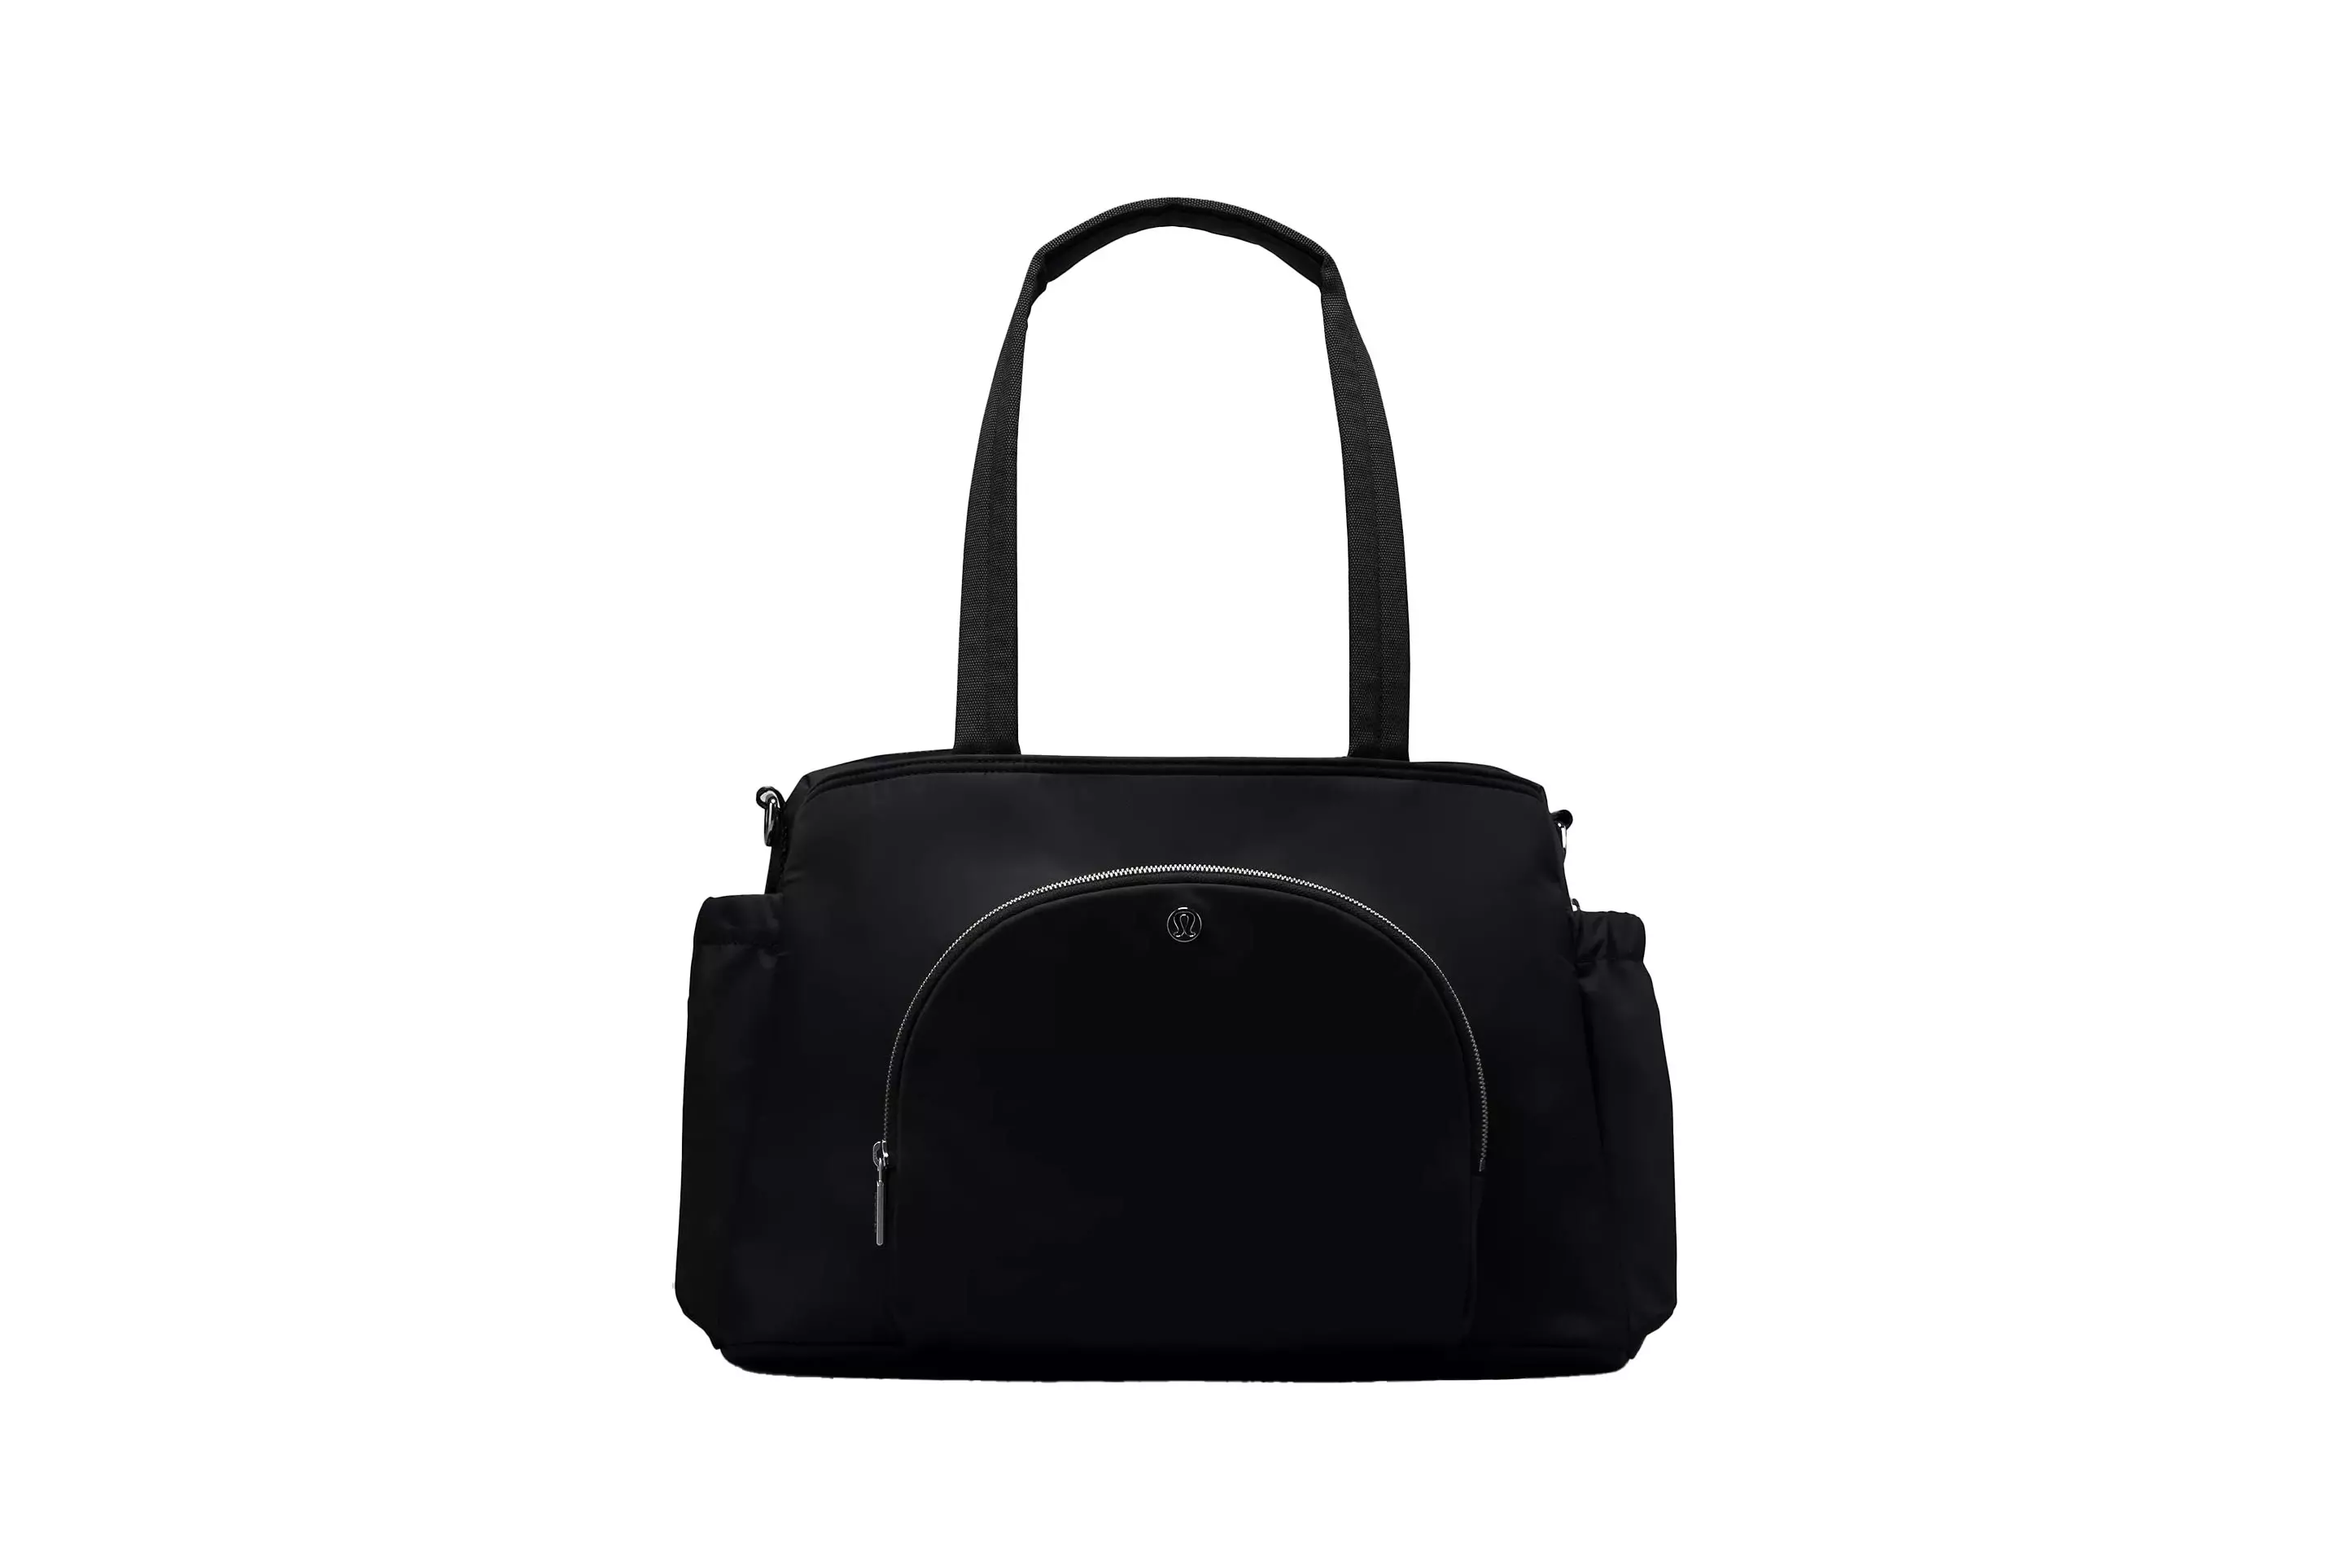 Black bag with handle.